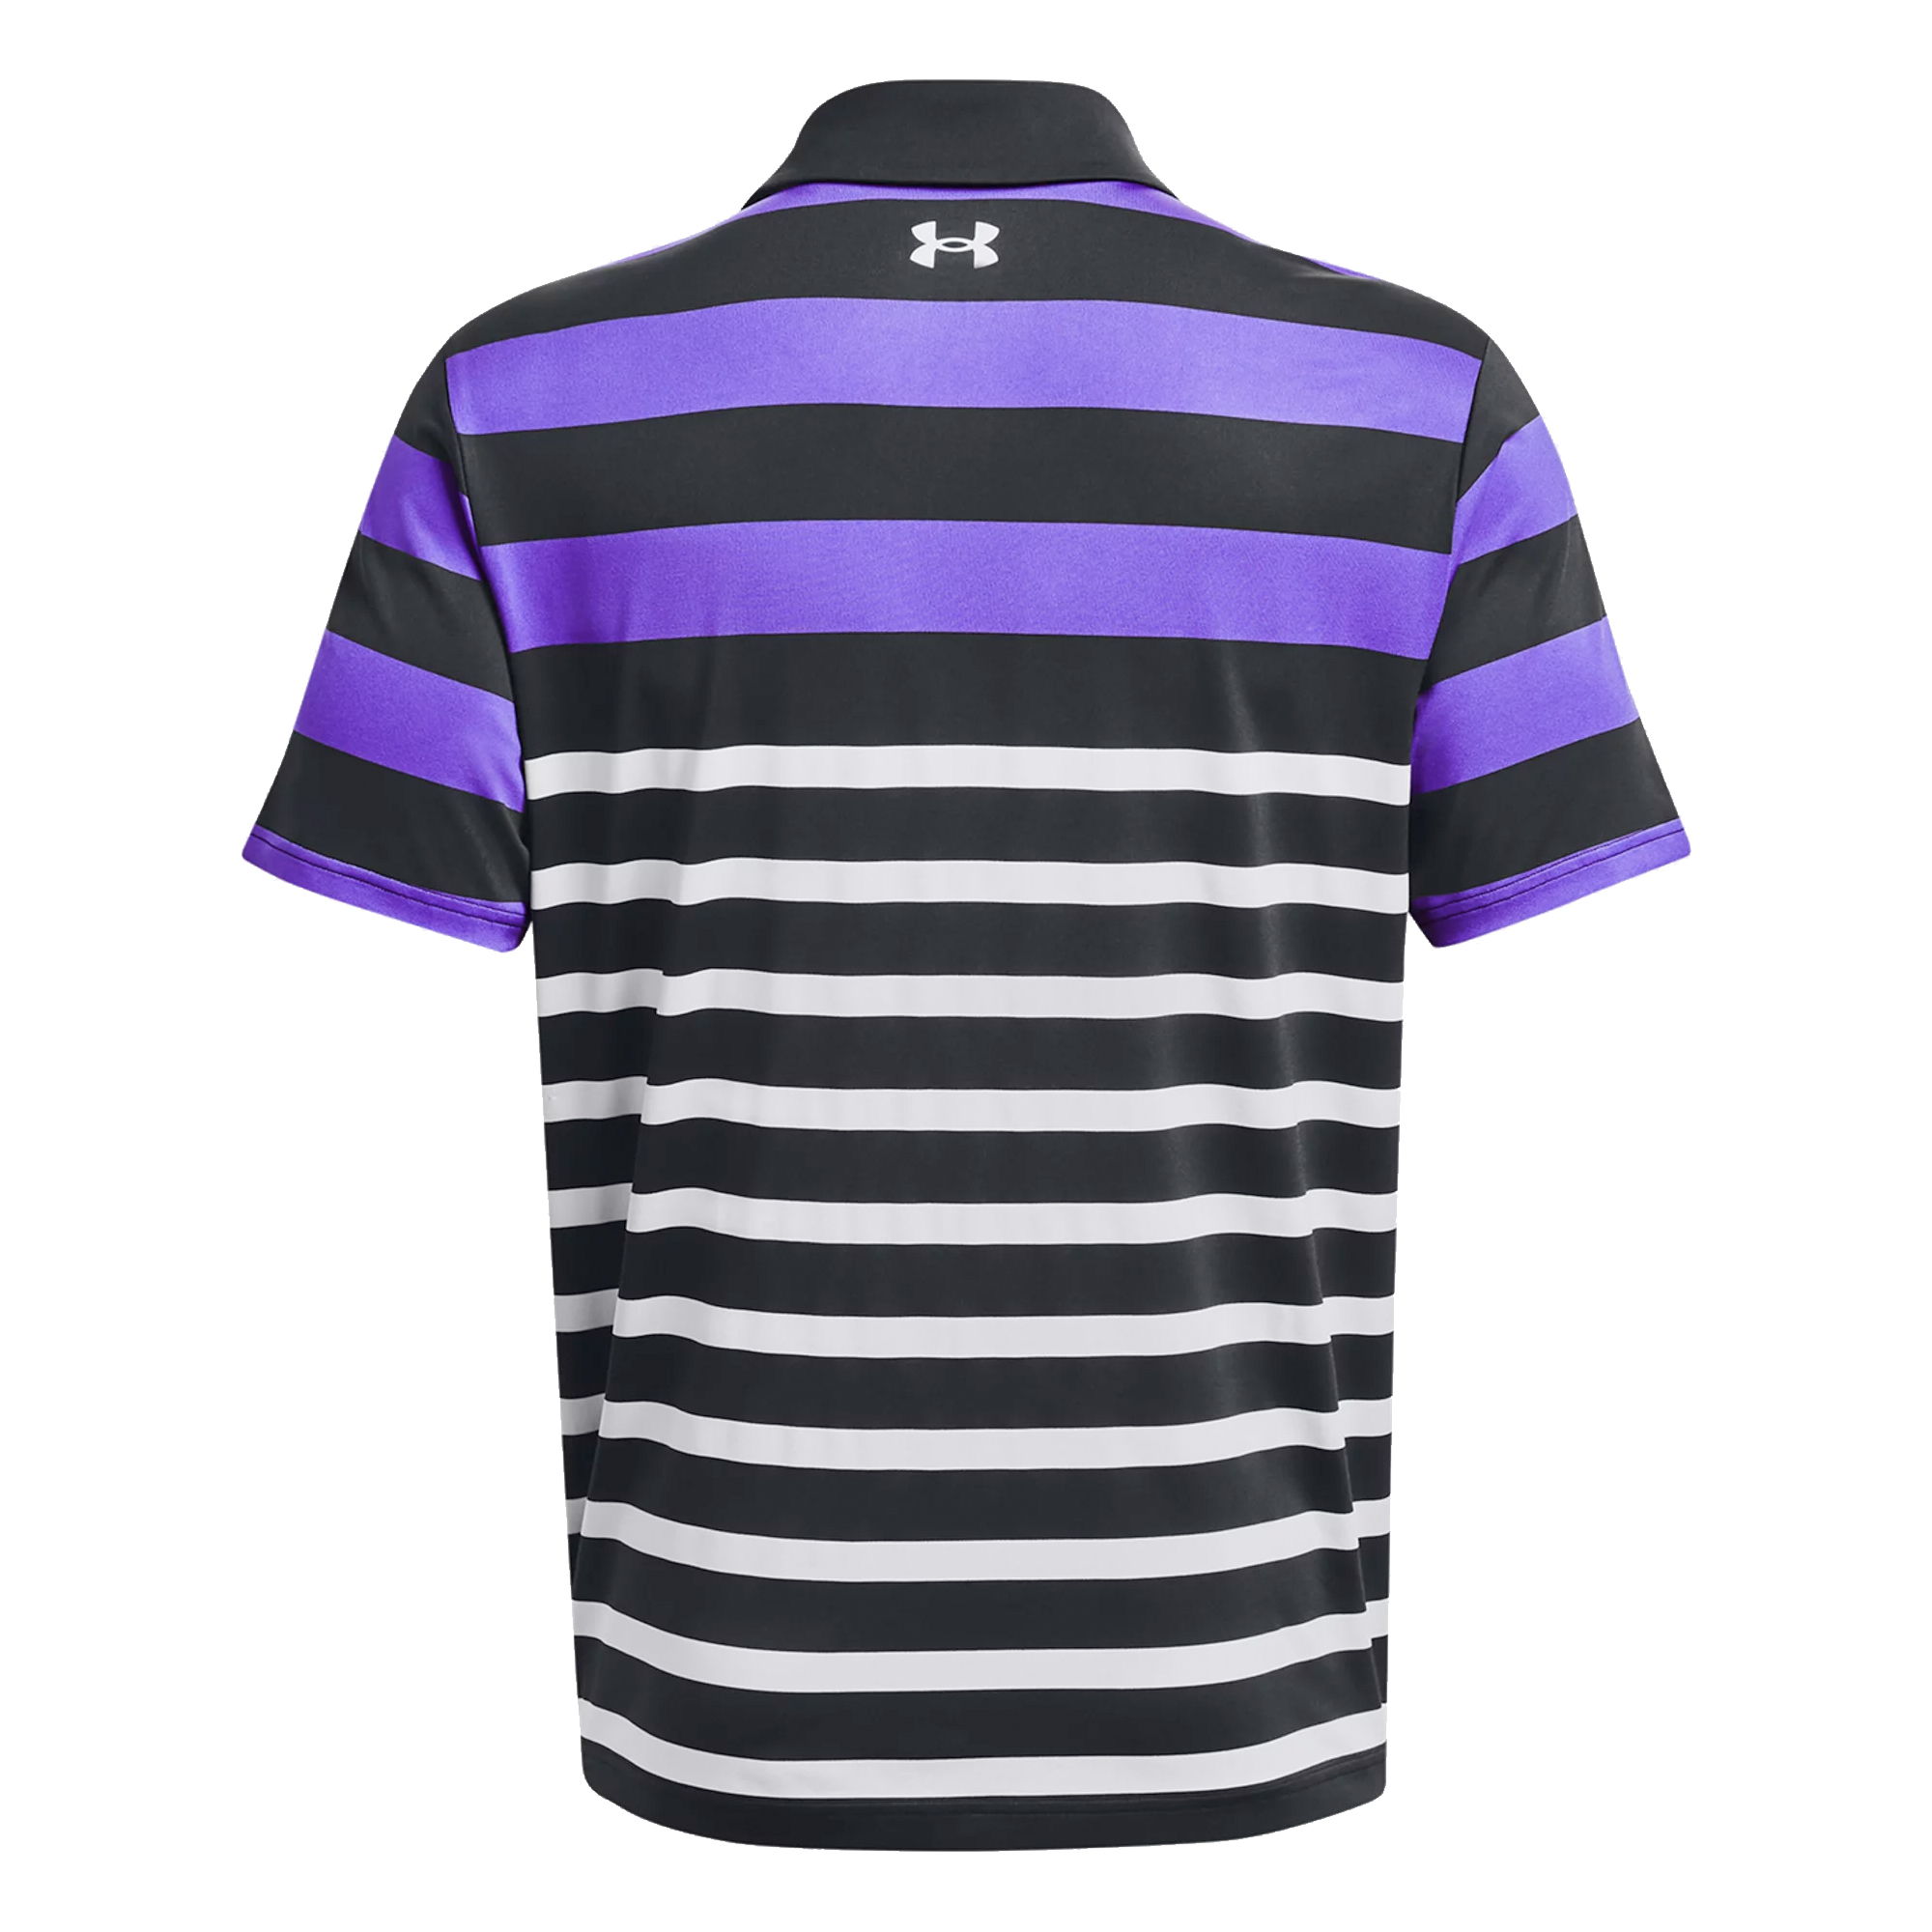 Under Armour Golf Playoff 3.0 Stripe Polo Shirt  - Black/Electric Purple